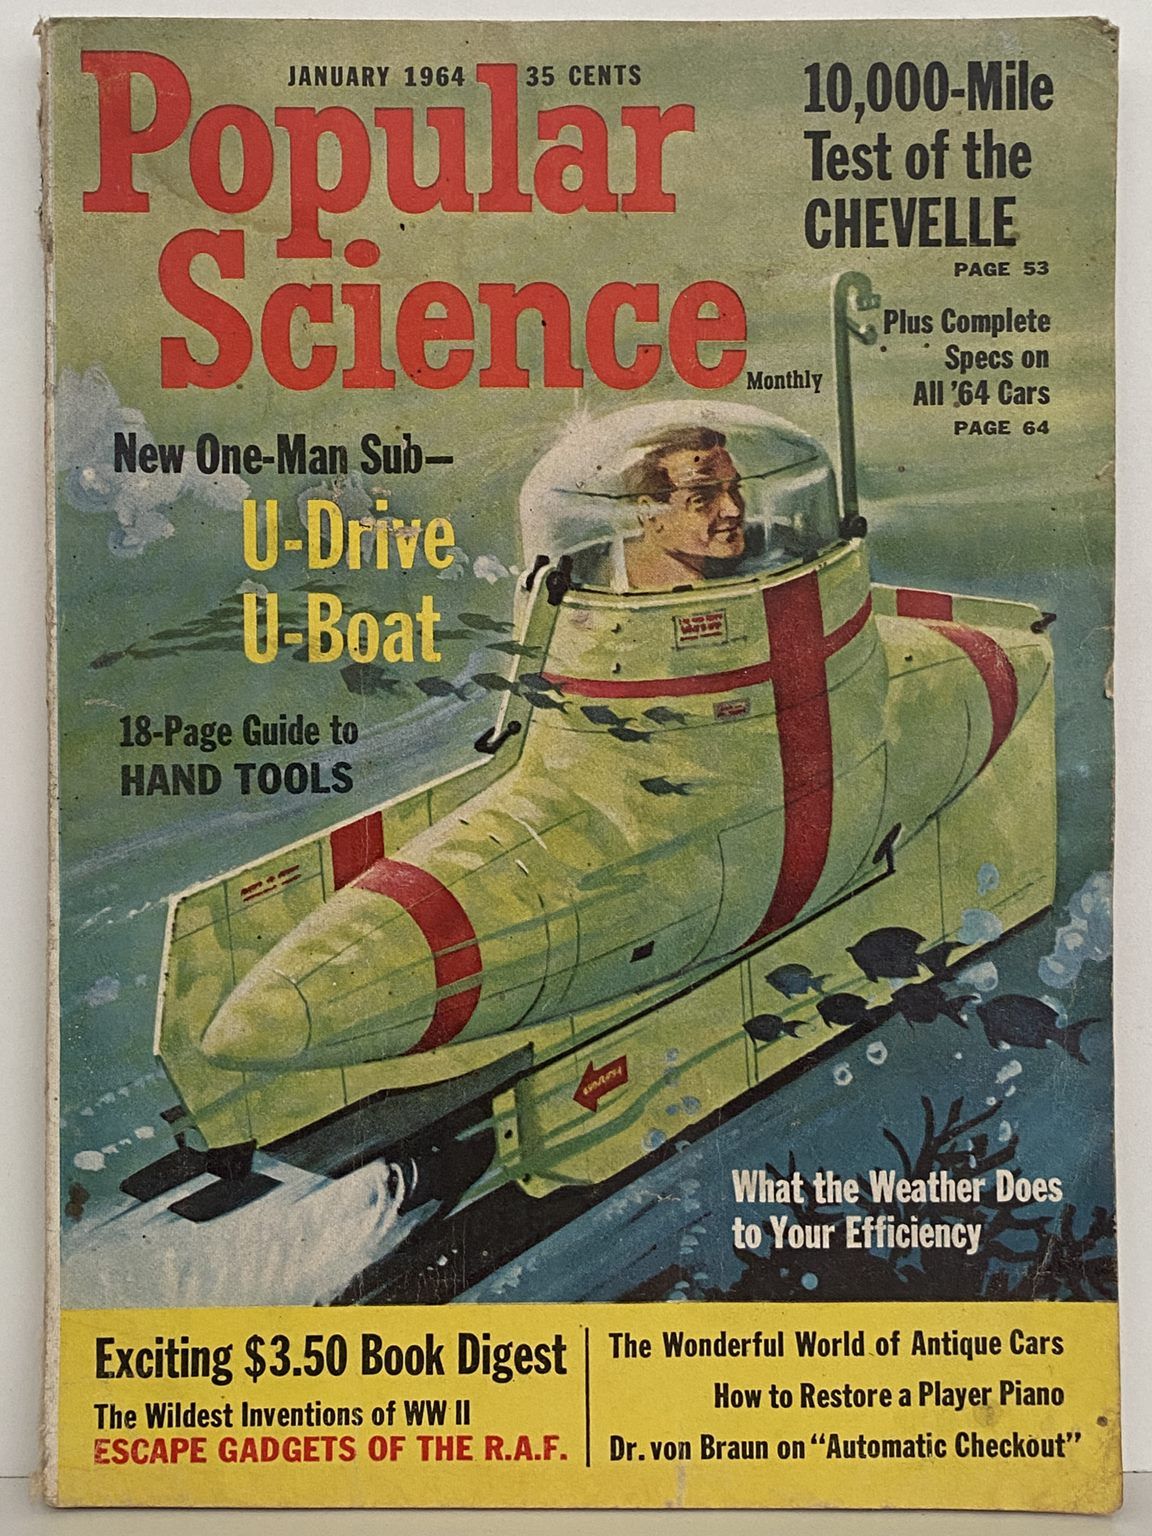 VINTAGE MAGAZINE: Popular Science - January 1964